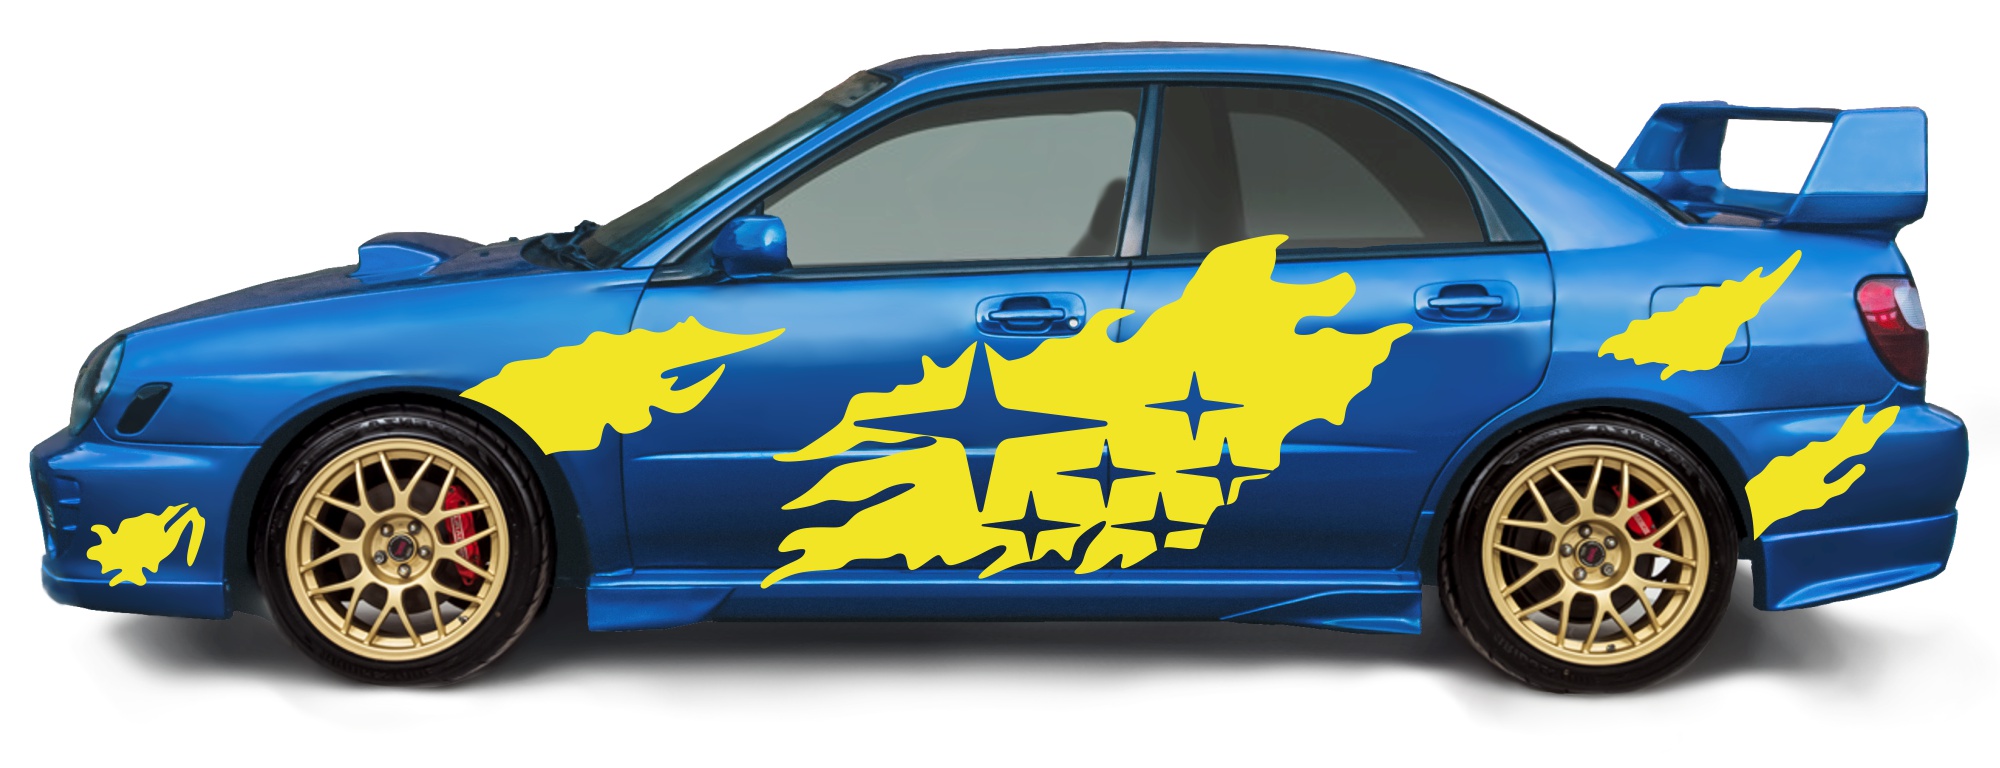 Subaru rally żółte logo Sport naklejki decals stripes sticker aufkleber nalepky samolepky tuning